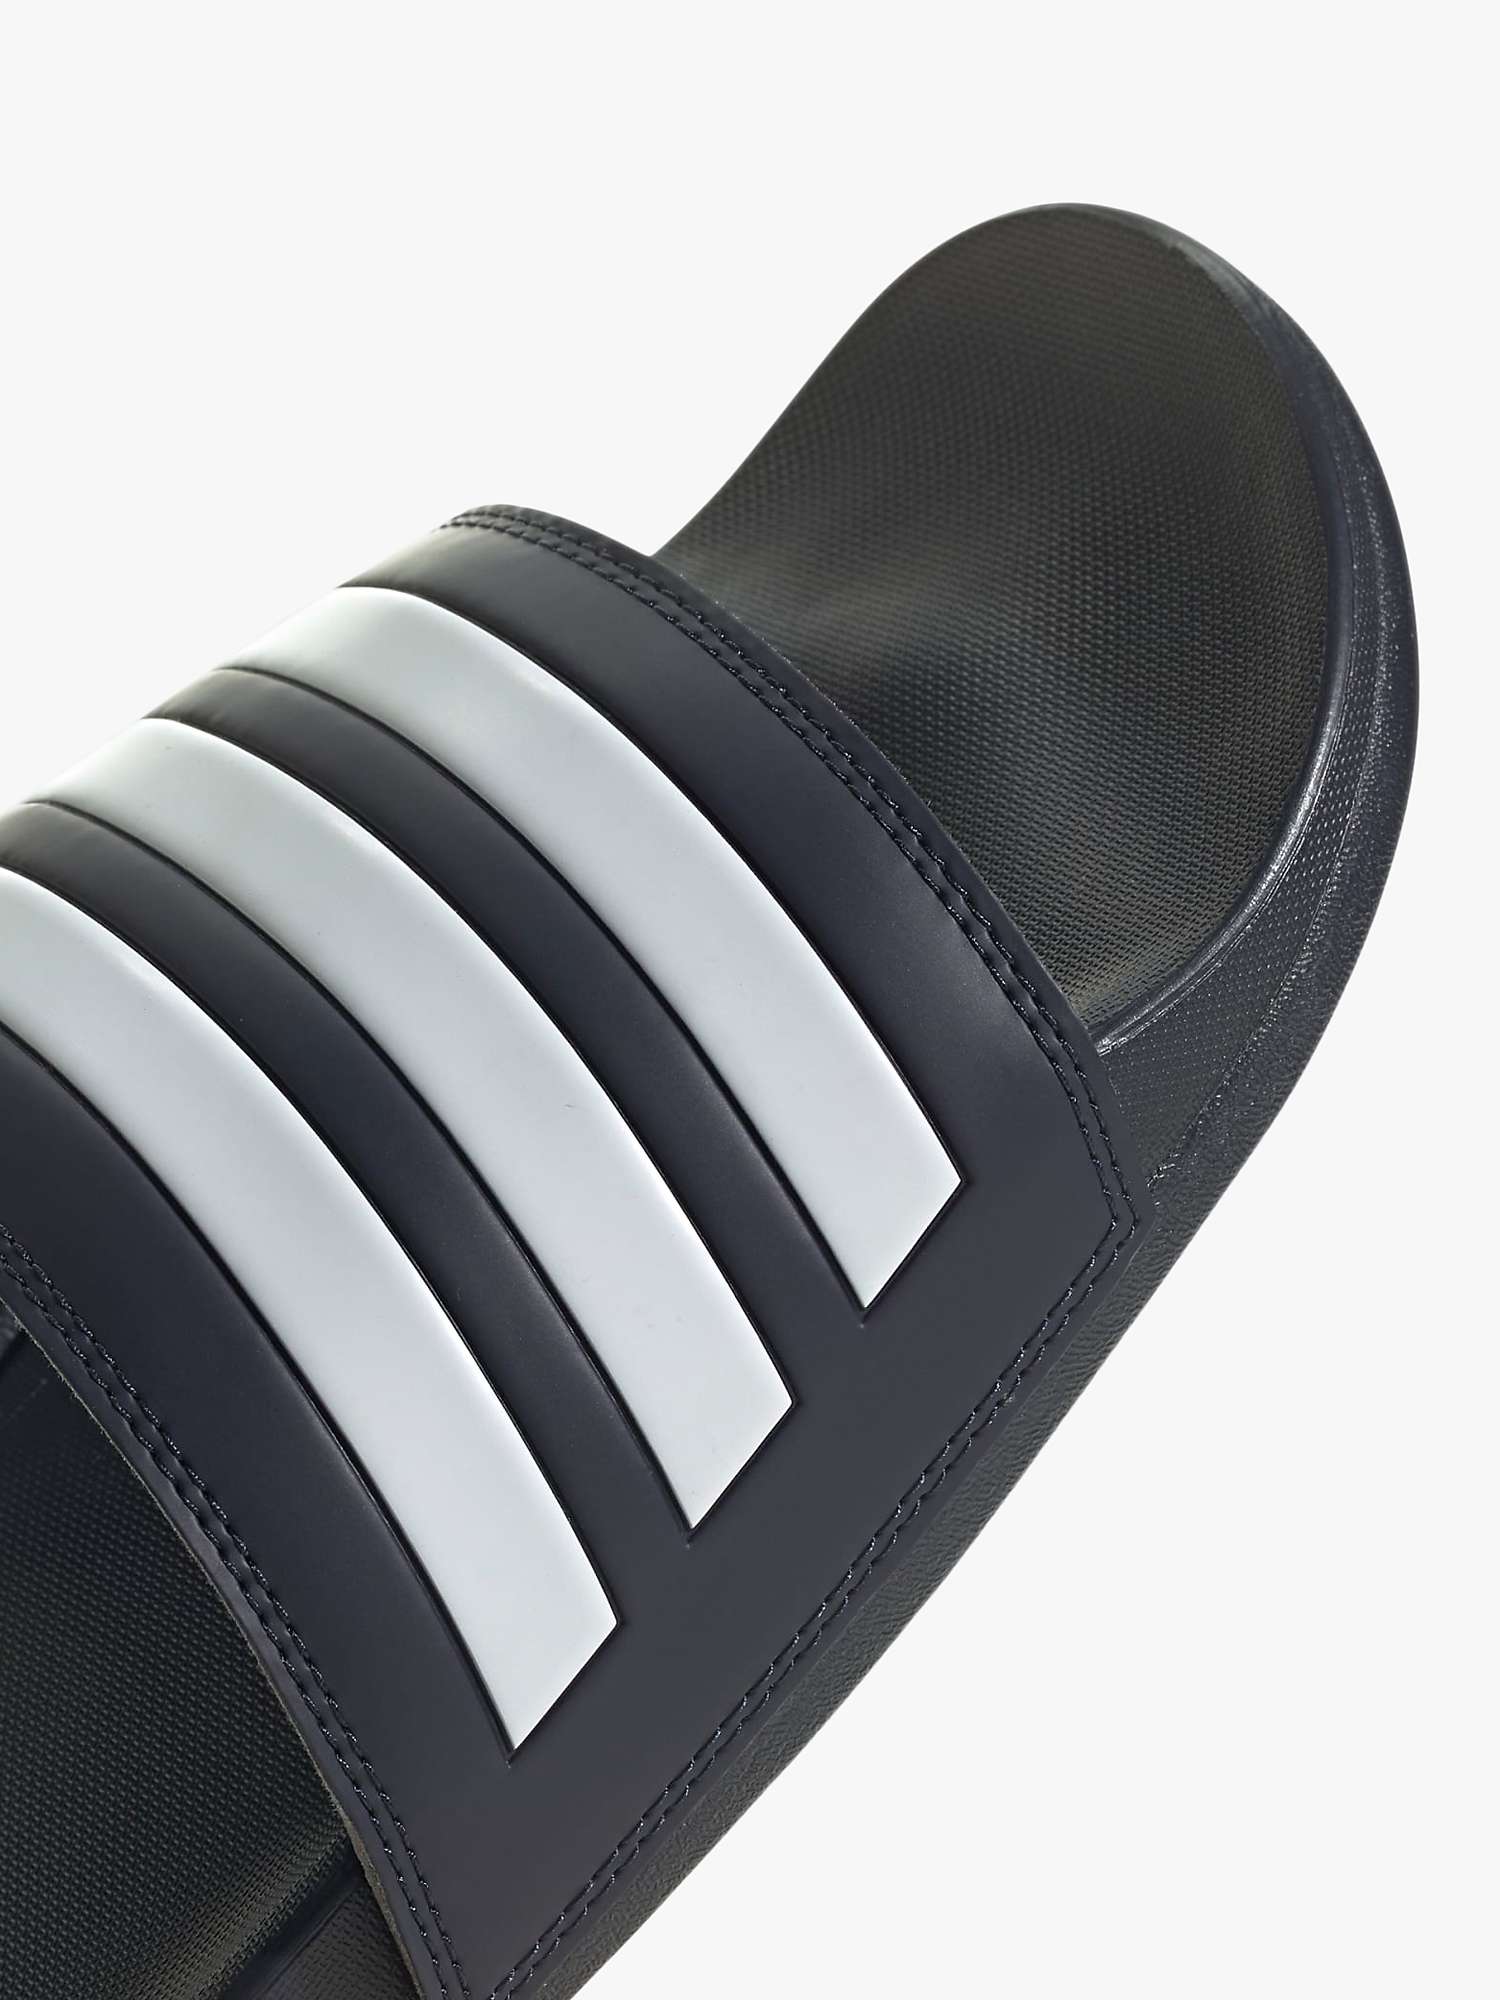 Buy adidas Adilette Aqua Comfort Slides Slippers Online at johnlewis.com